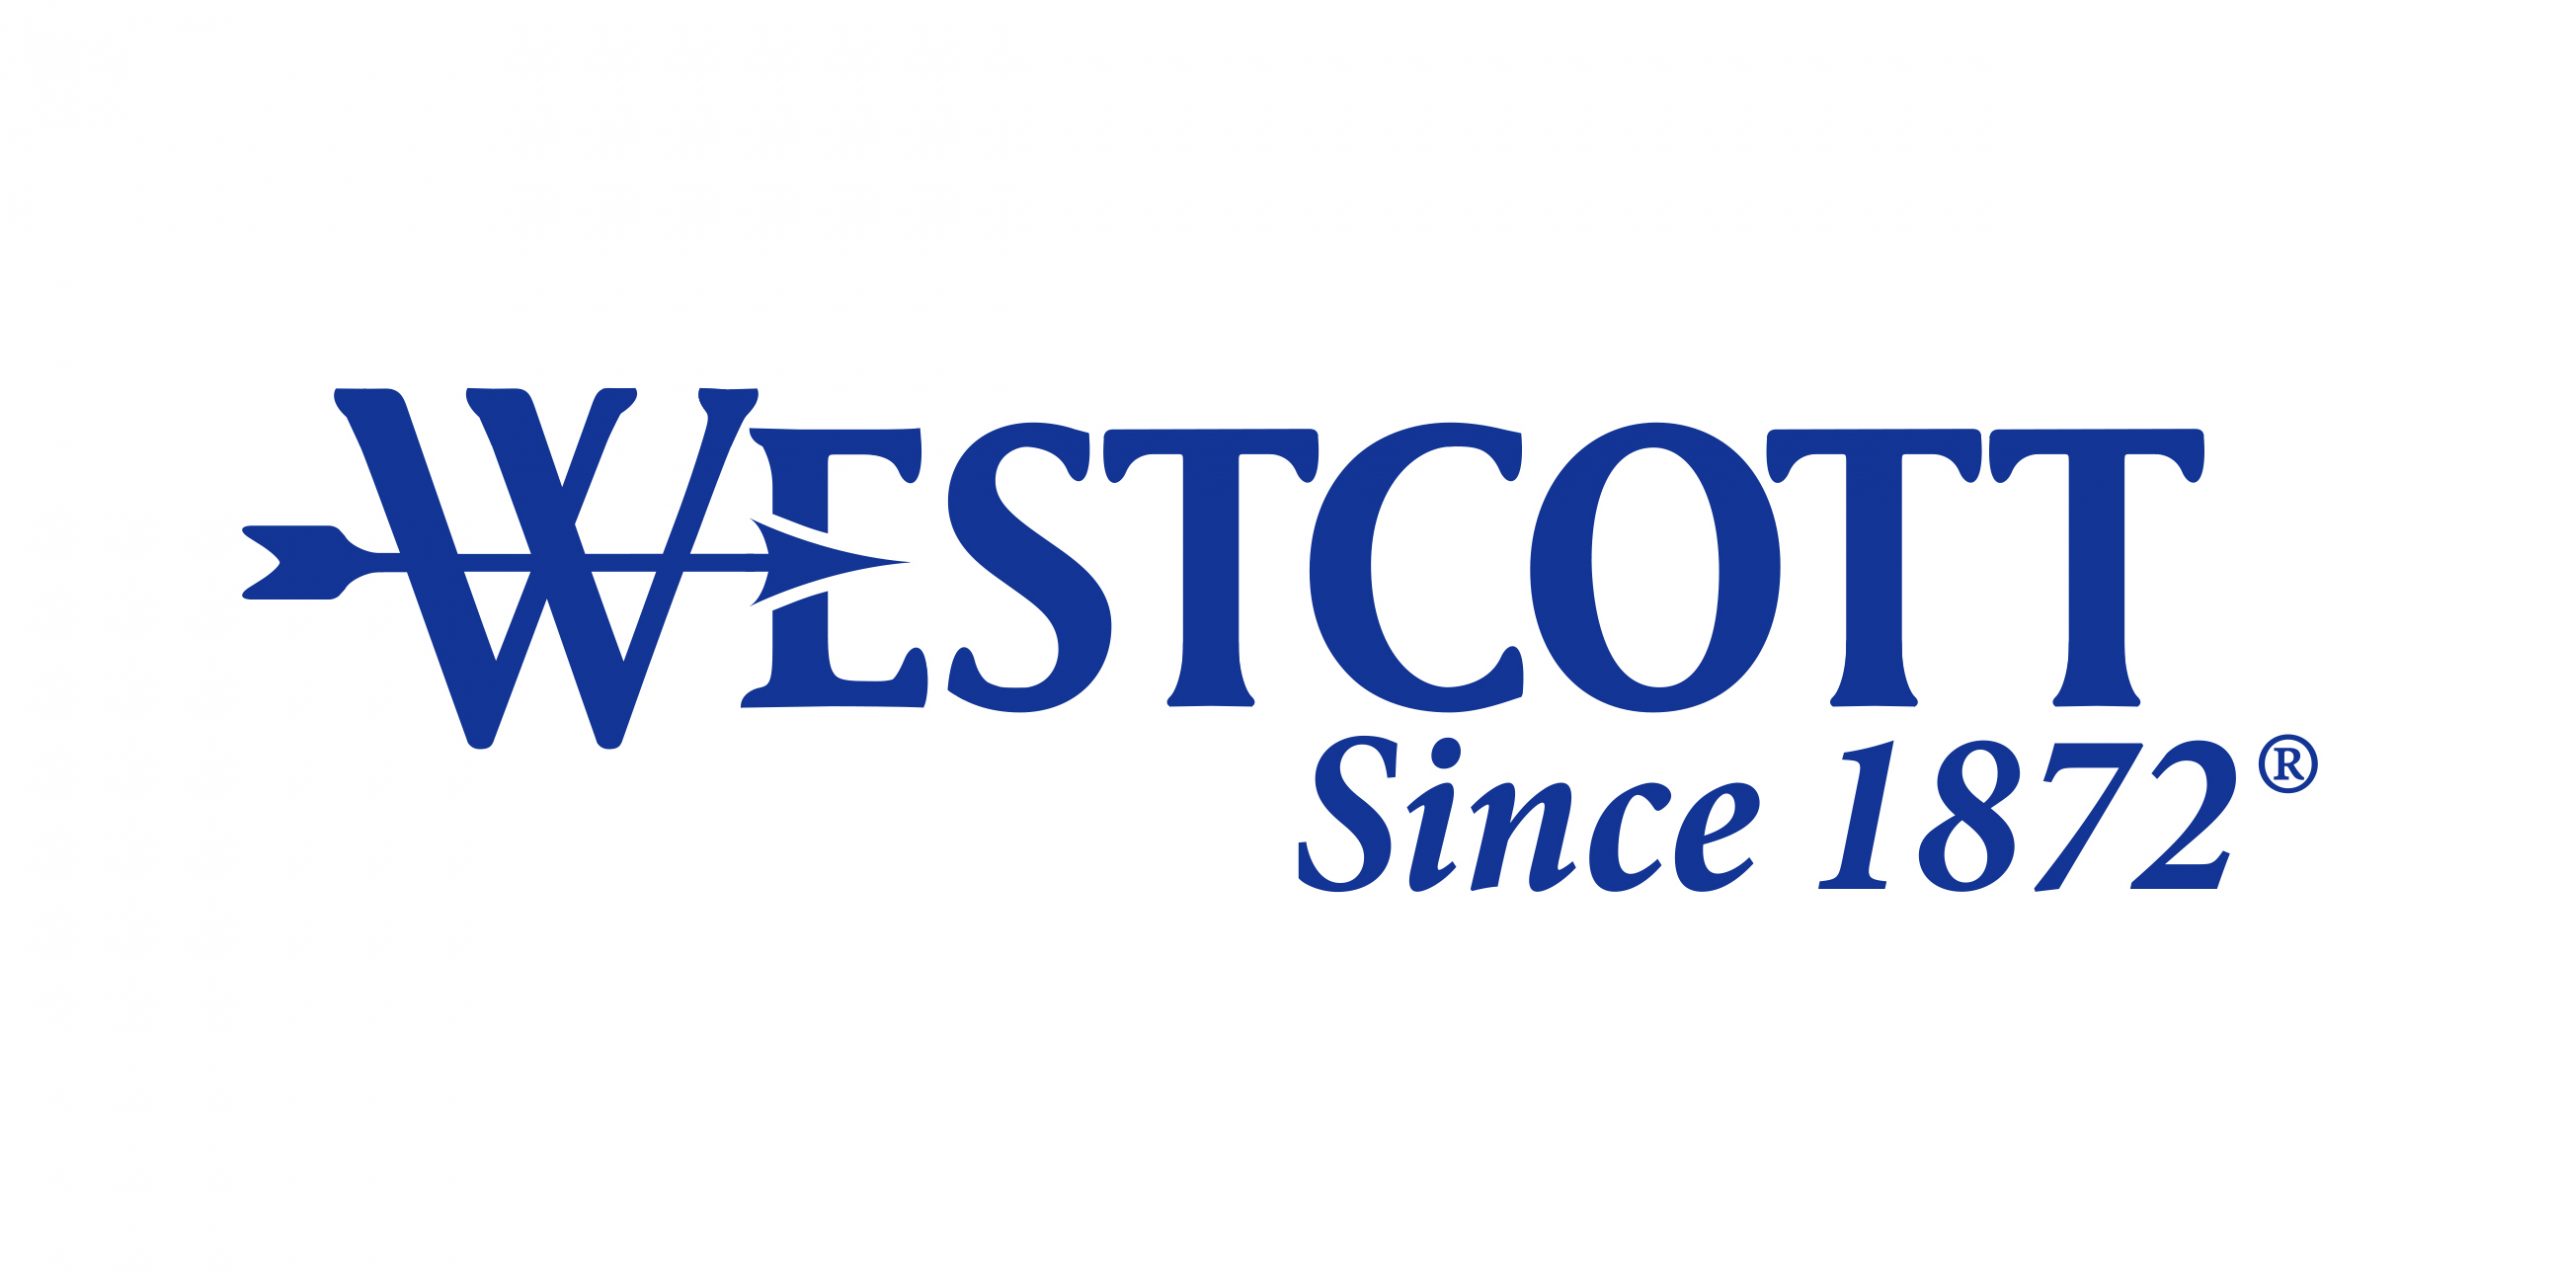 Westcott - Westcott 12 x 18 Projectmate Silicone Non-Stick Craft